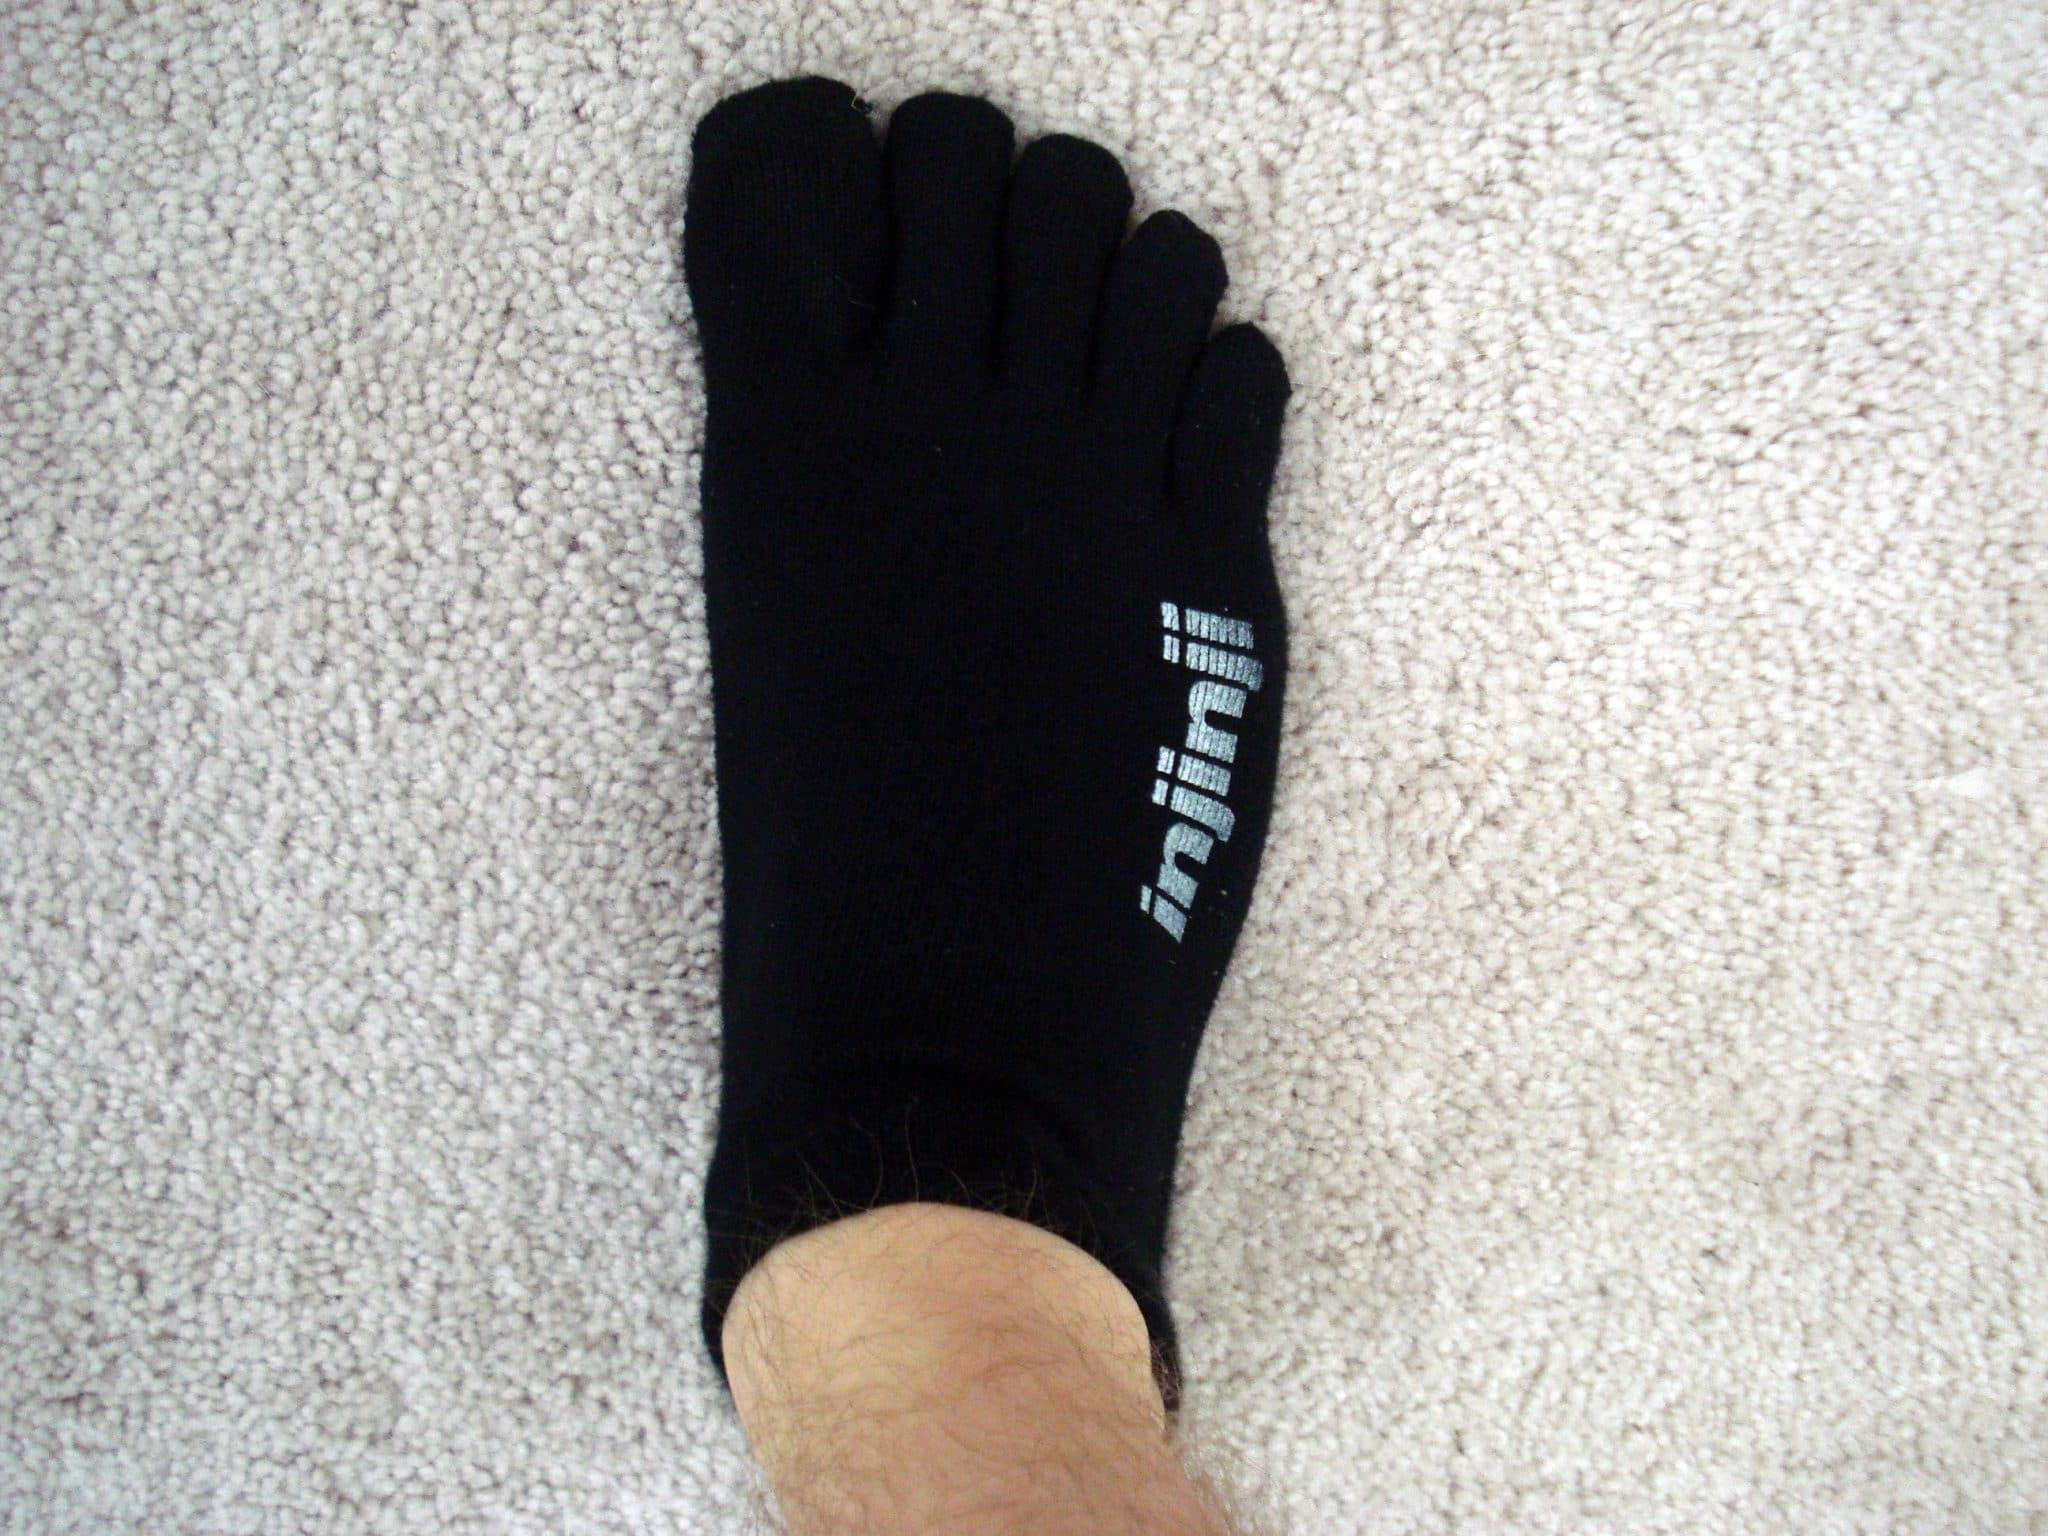 Right foot wearing black toe socks